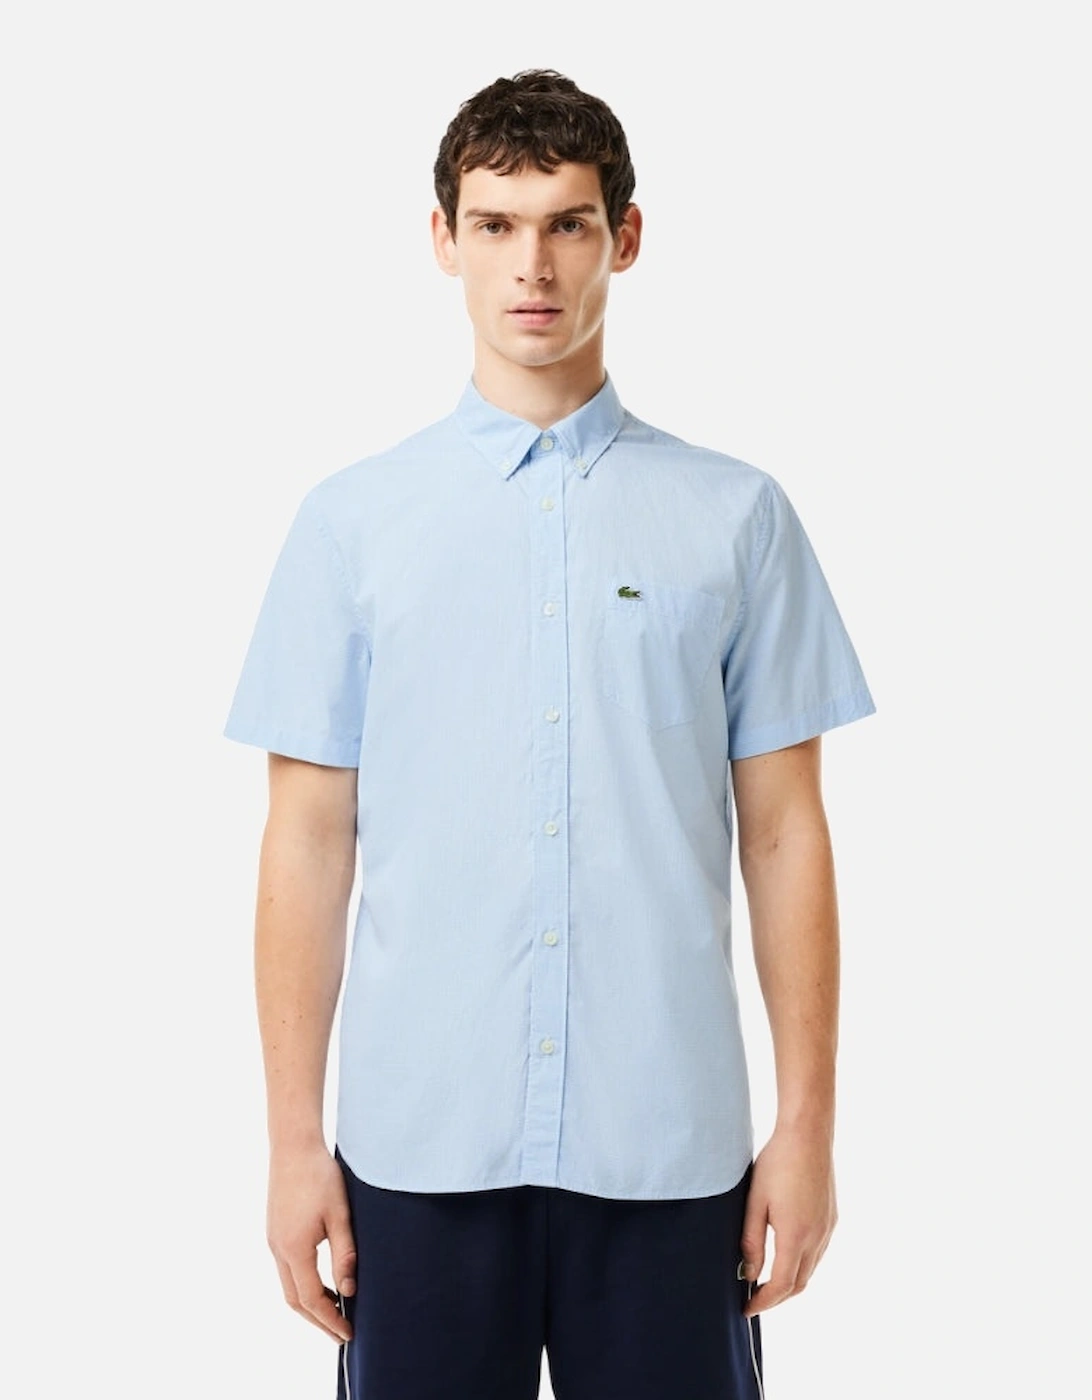 SS Gingham Shirt - White/Blue